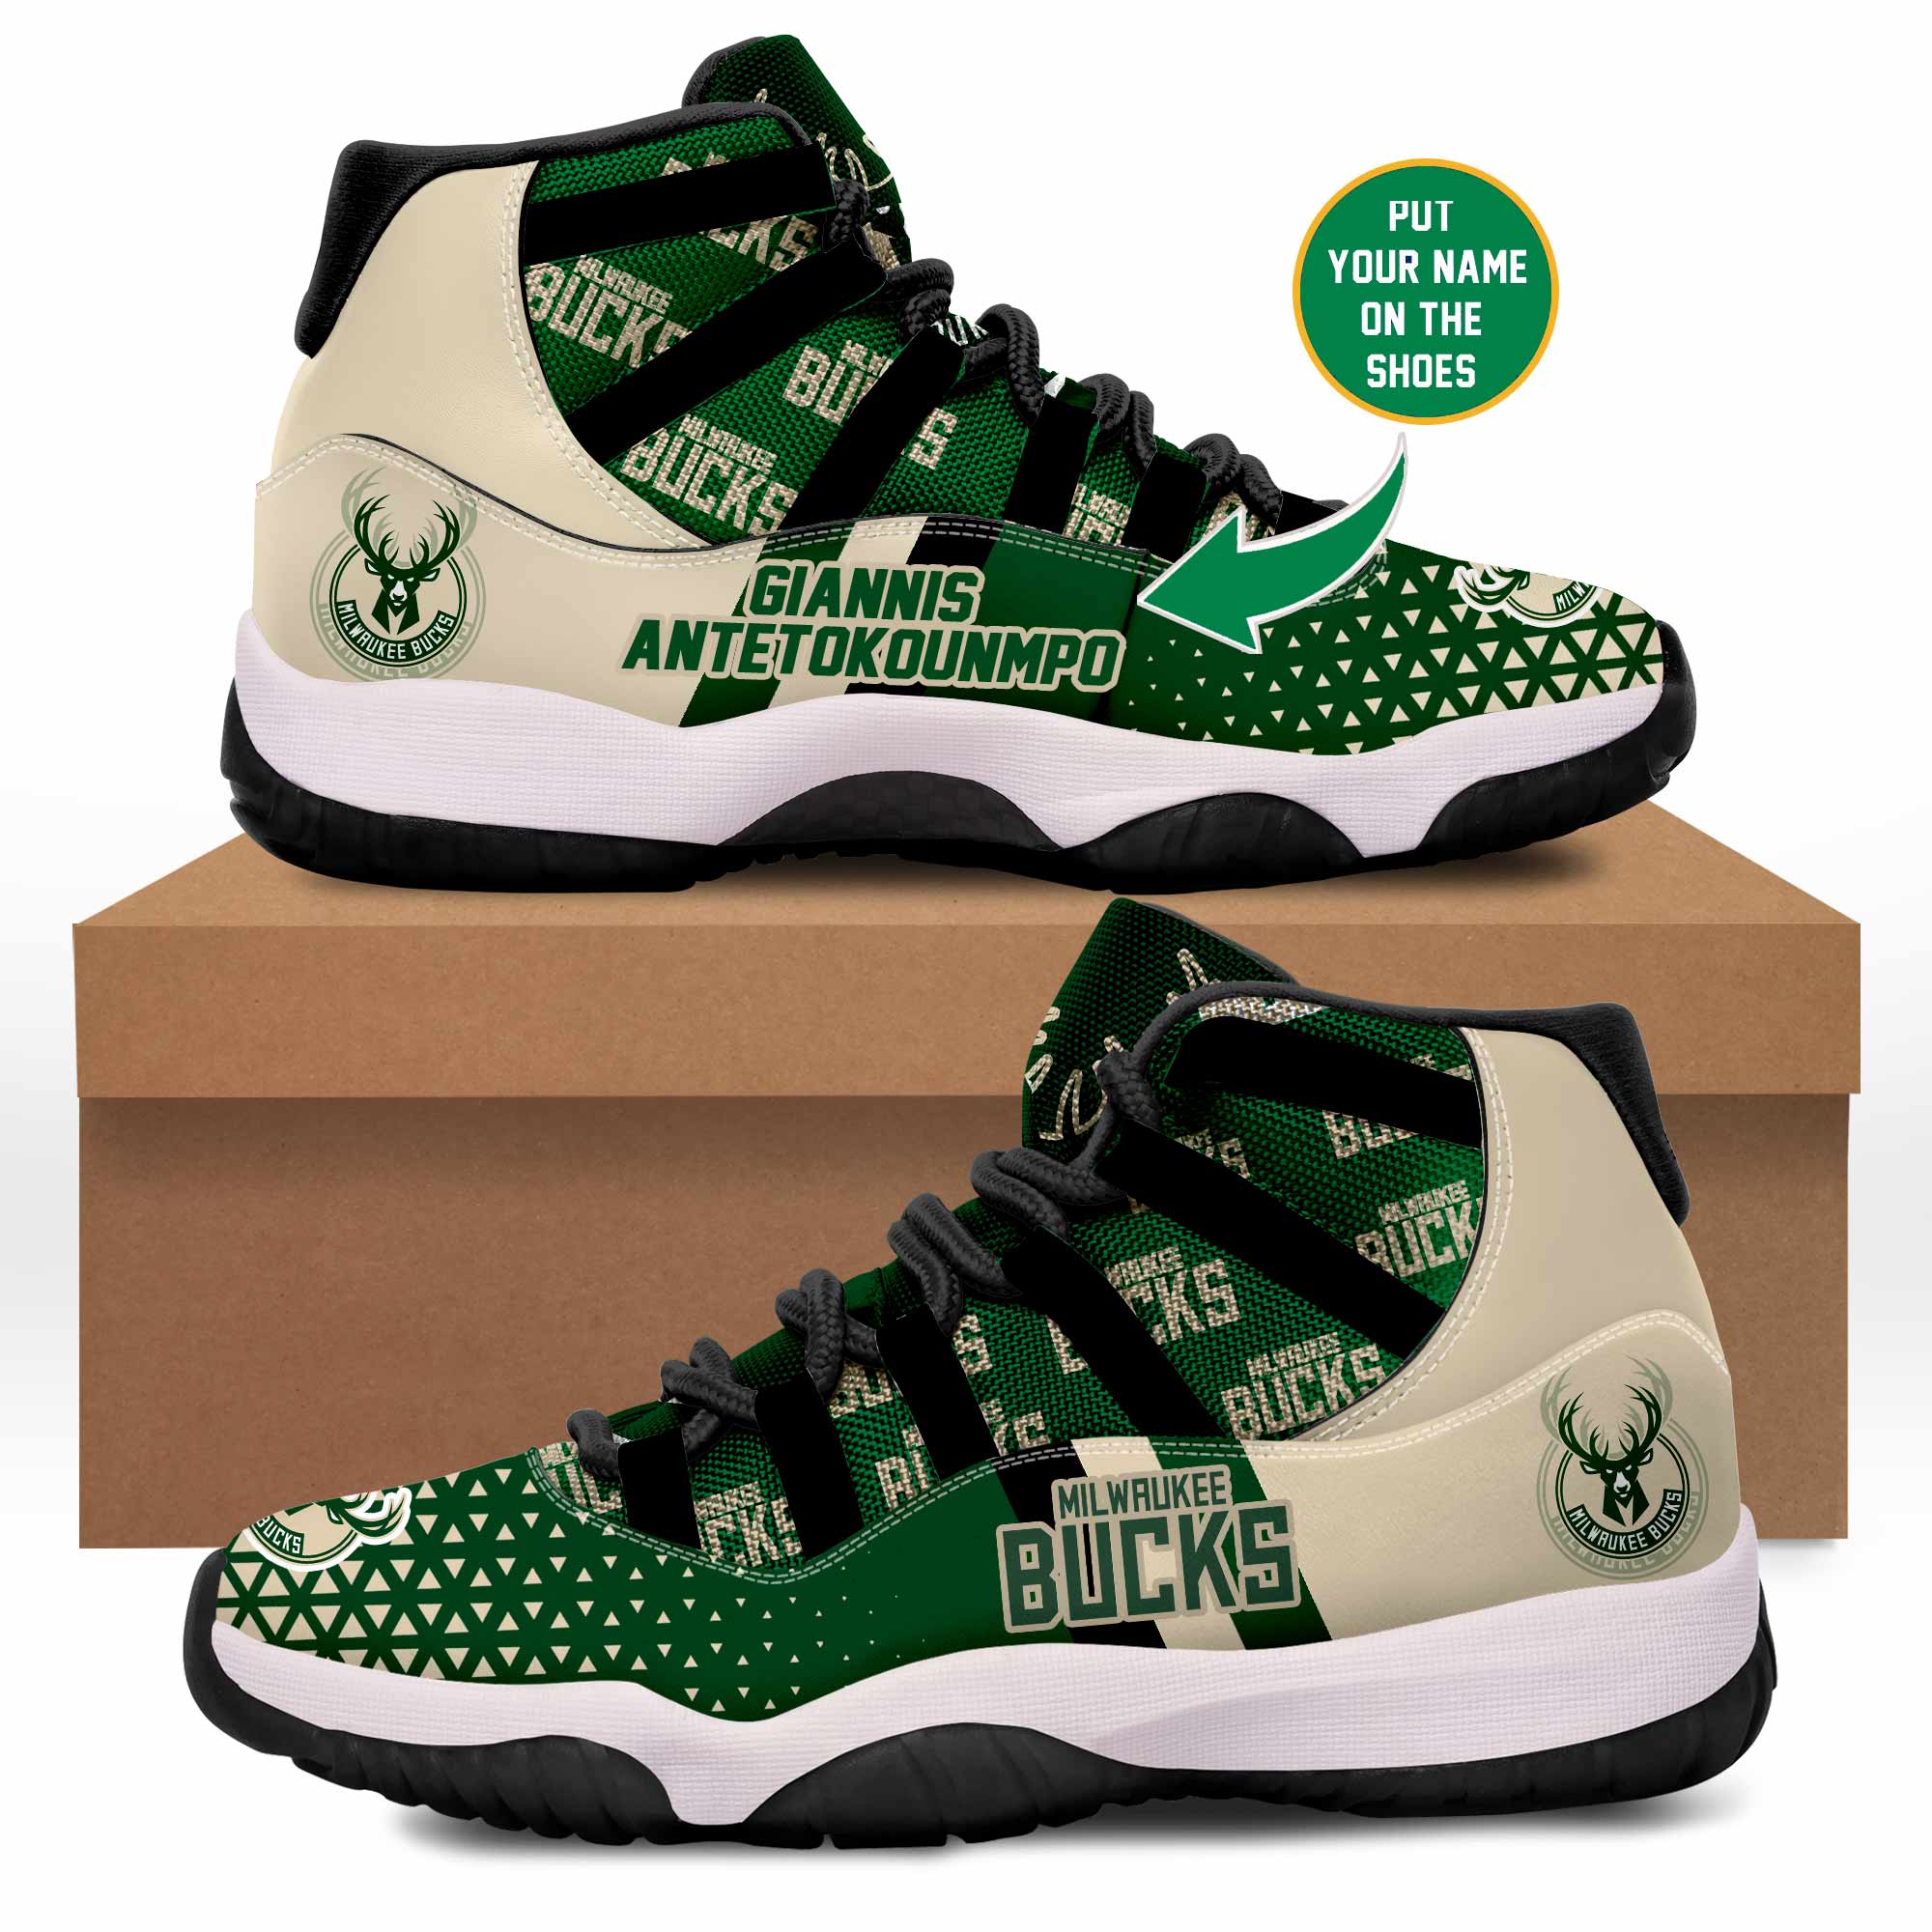 NBA Celtics Jordan Retro 13 Custom Name - BTF Store